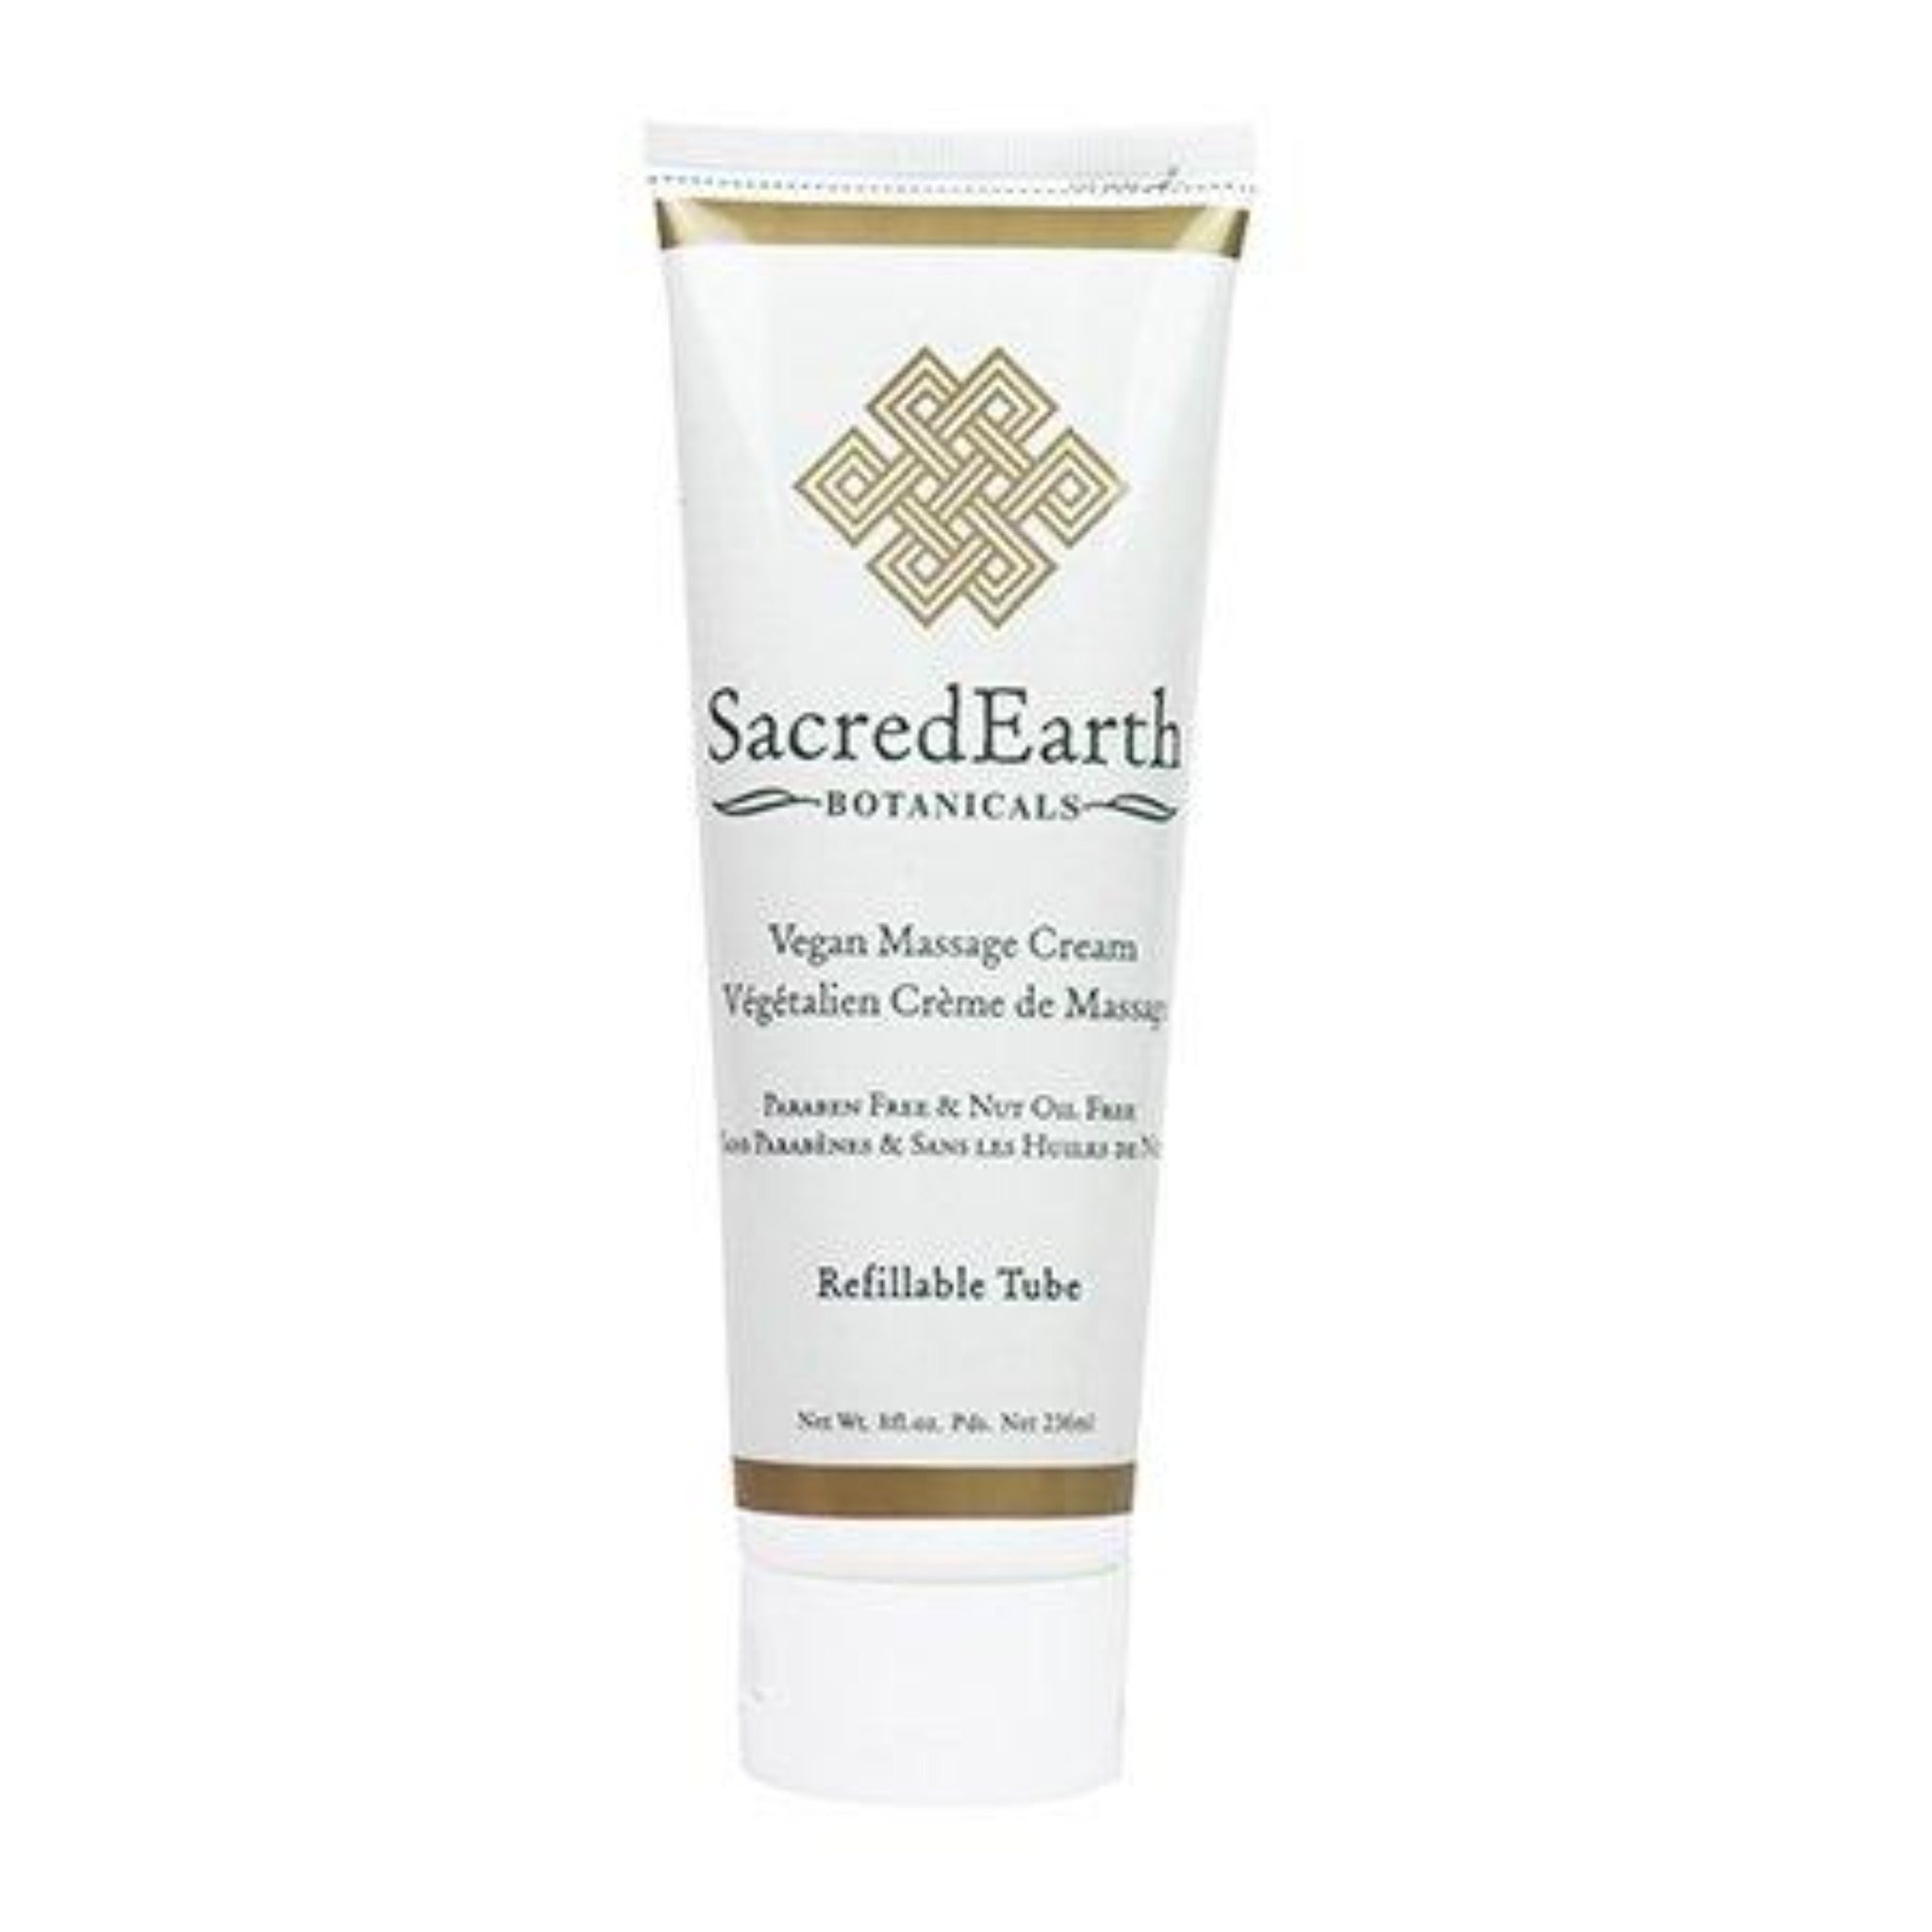 SacredEarth Botanicals Massage Cream 8 oz refillable tube